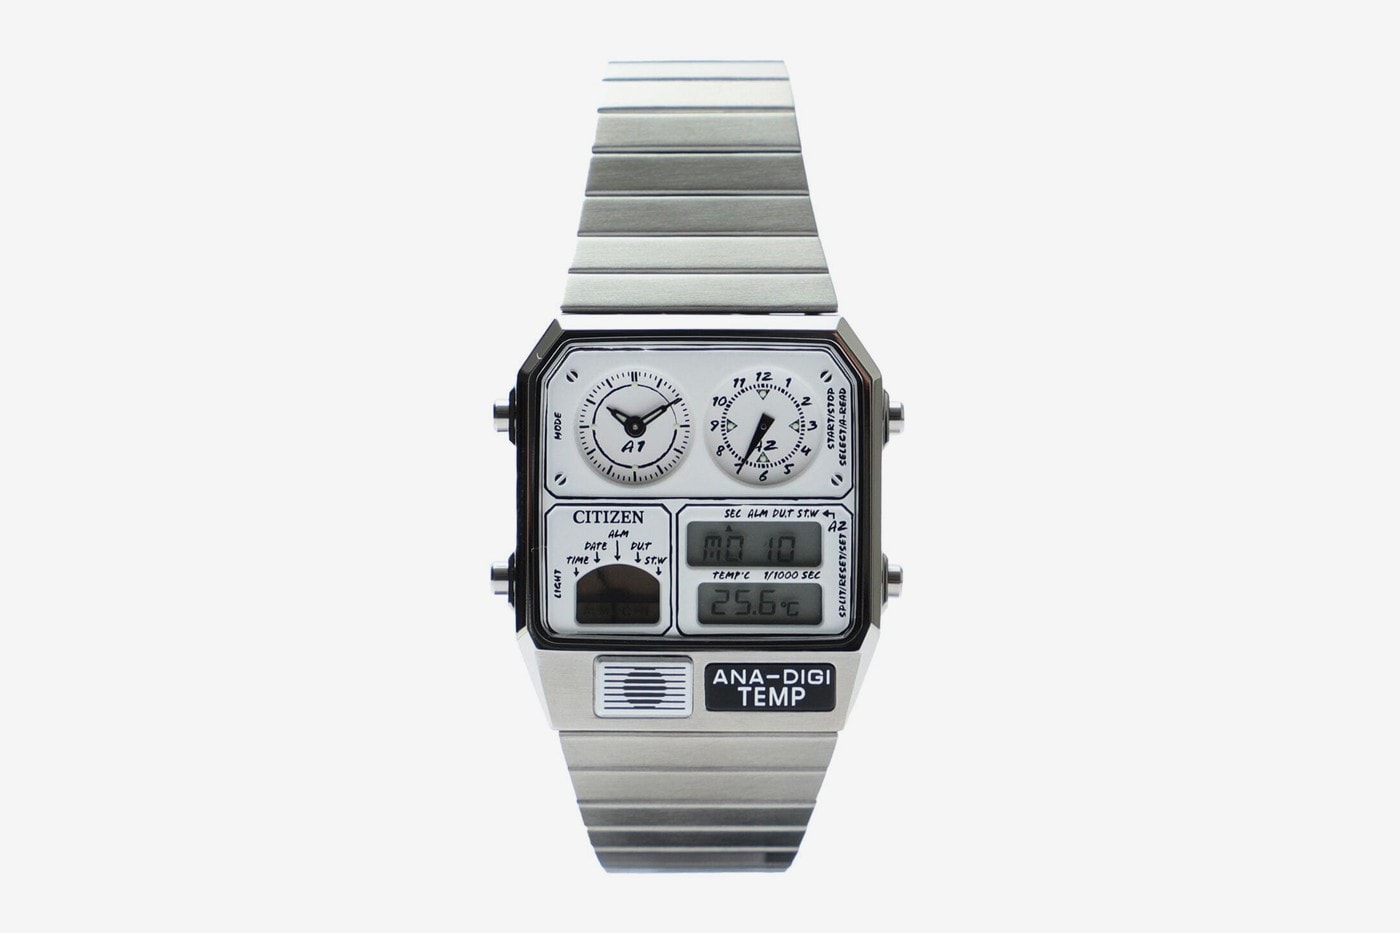 BEAMS x Citizen 聯乘錶款 ANA-DIGI TEMP 最新設計發佈